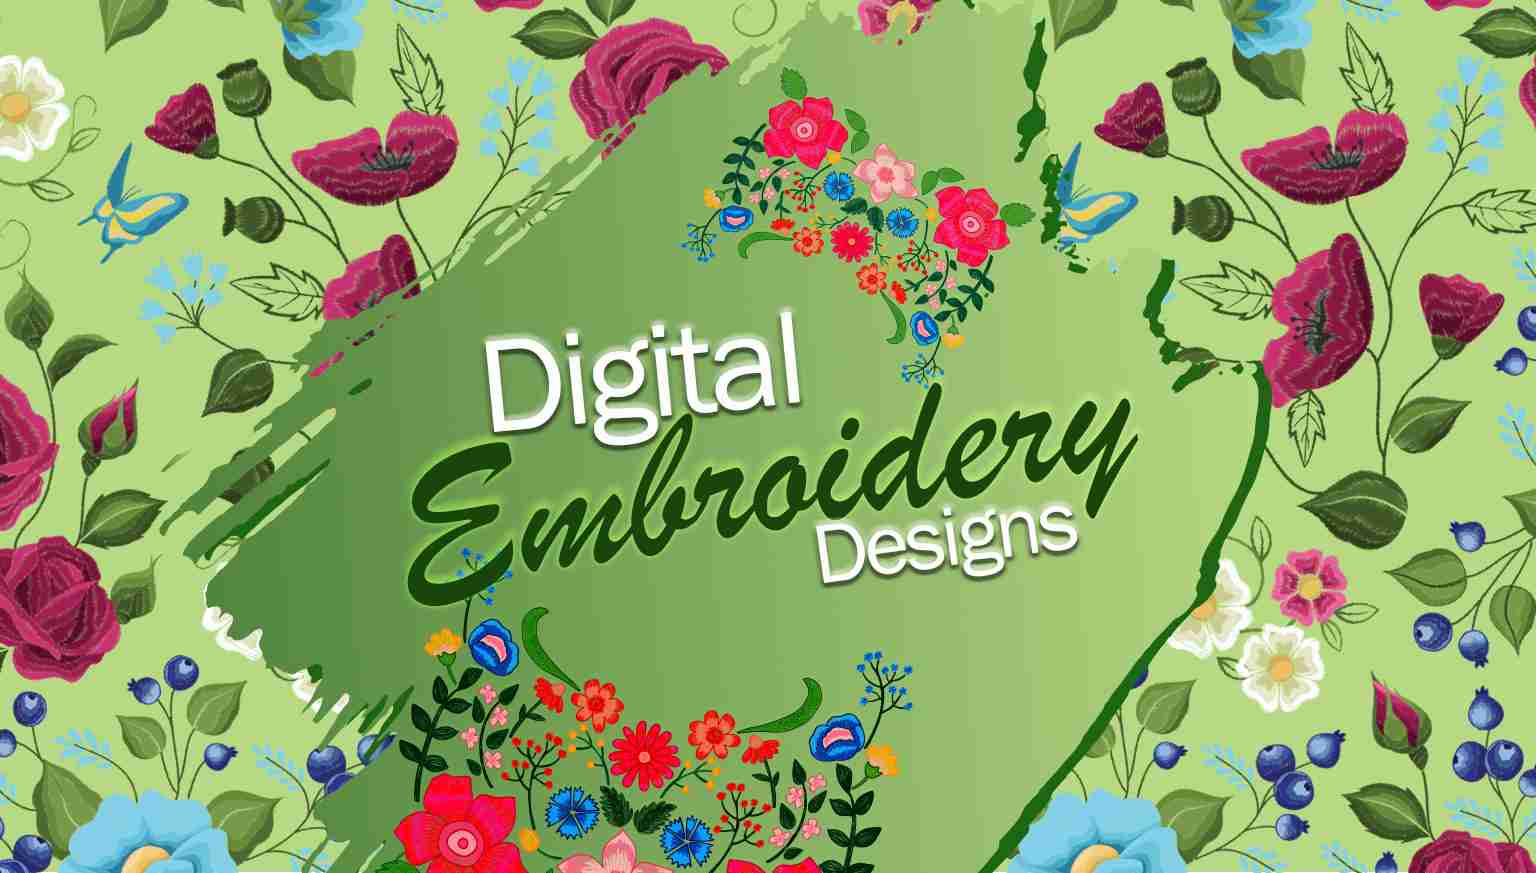 Digital Embroidery Designs